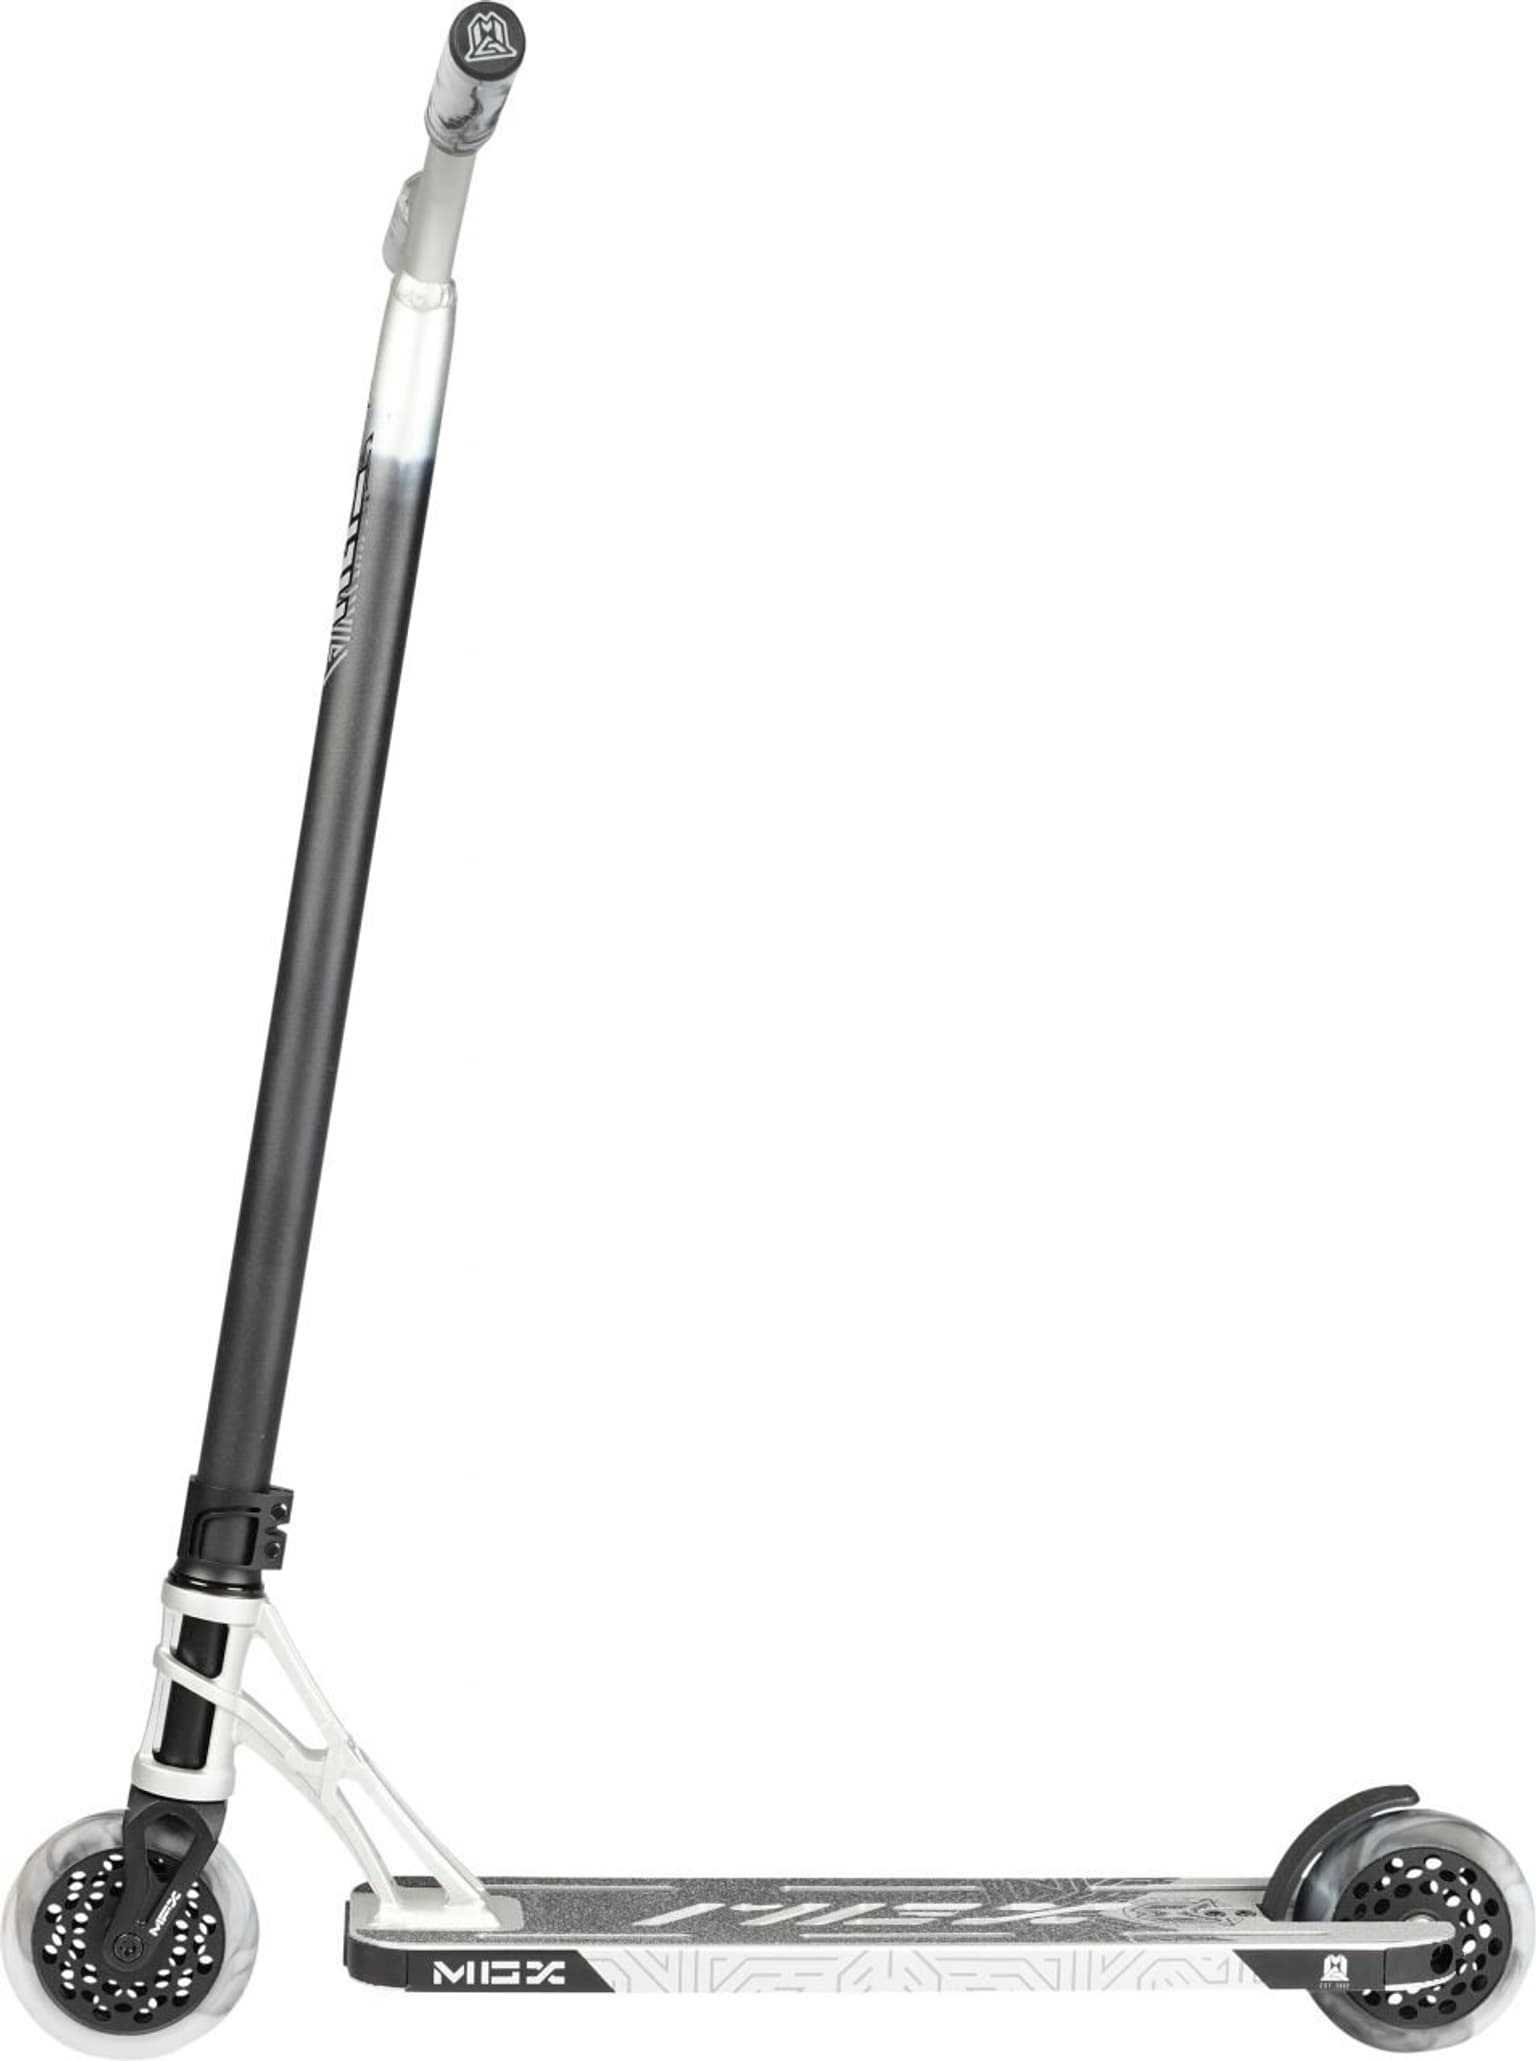 MGP MGP MGX Extreme E1 Scooter 5